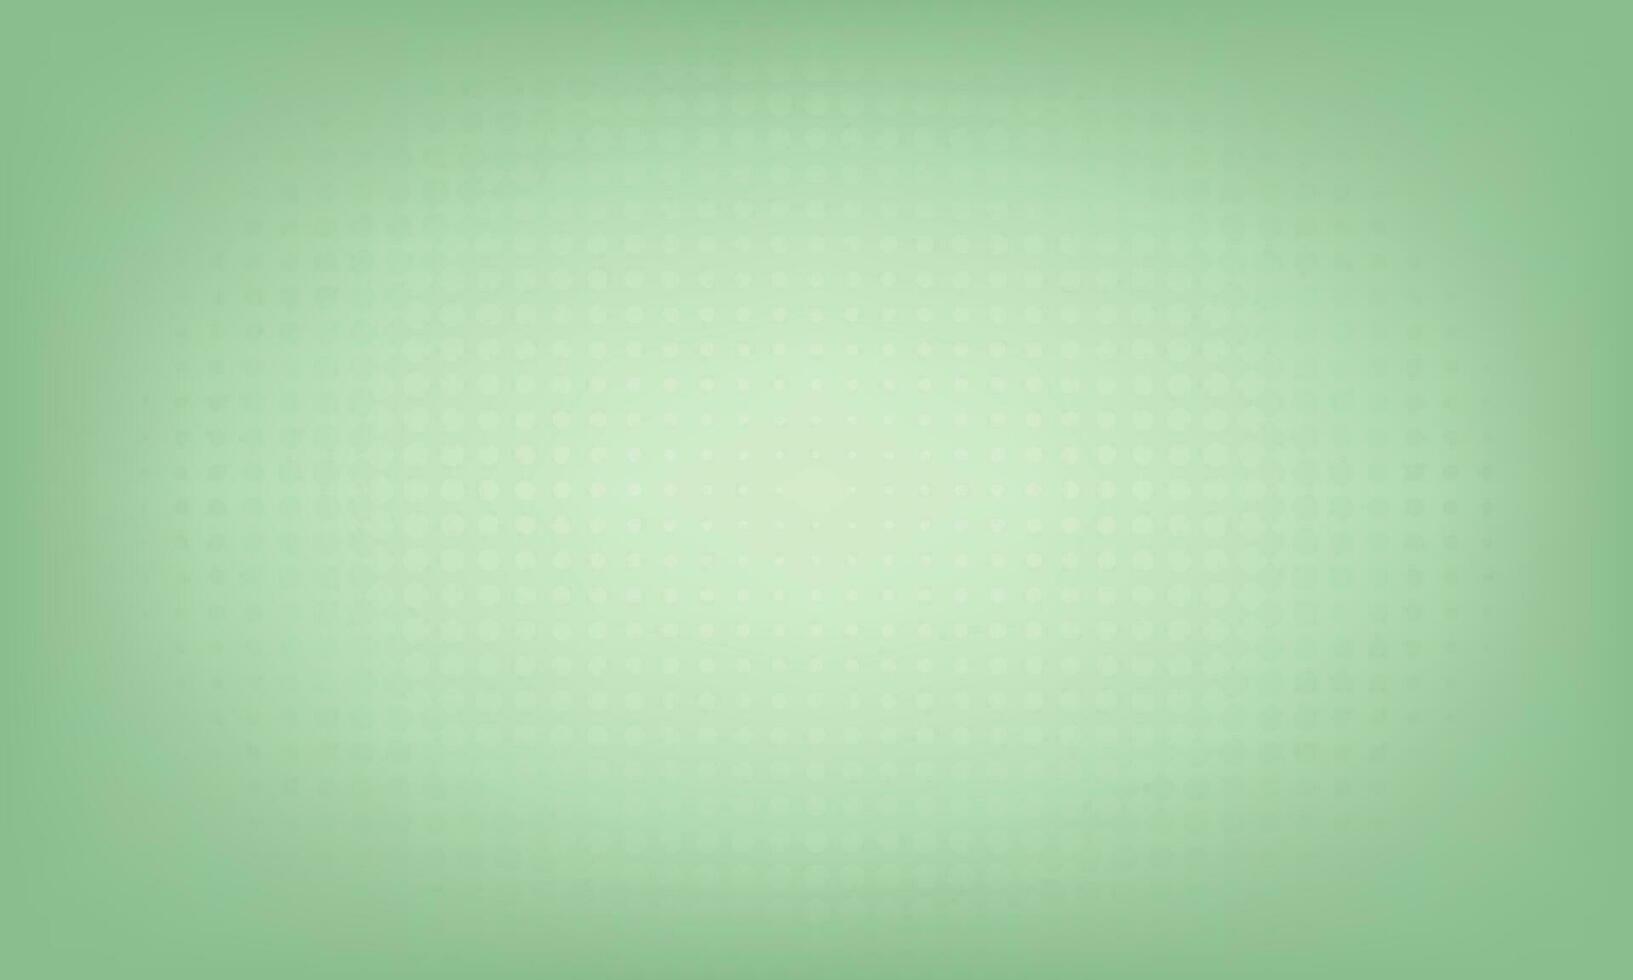 Dark Sea Green gradient color thumbnail web banner creative template background vector